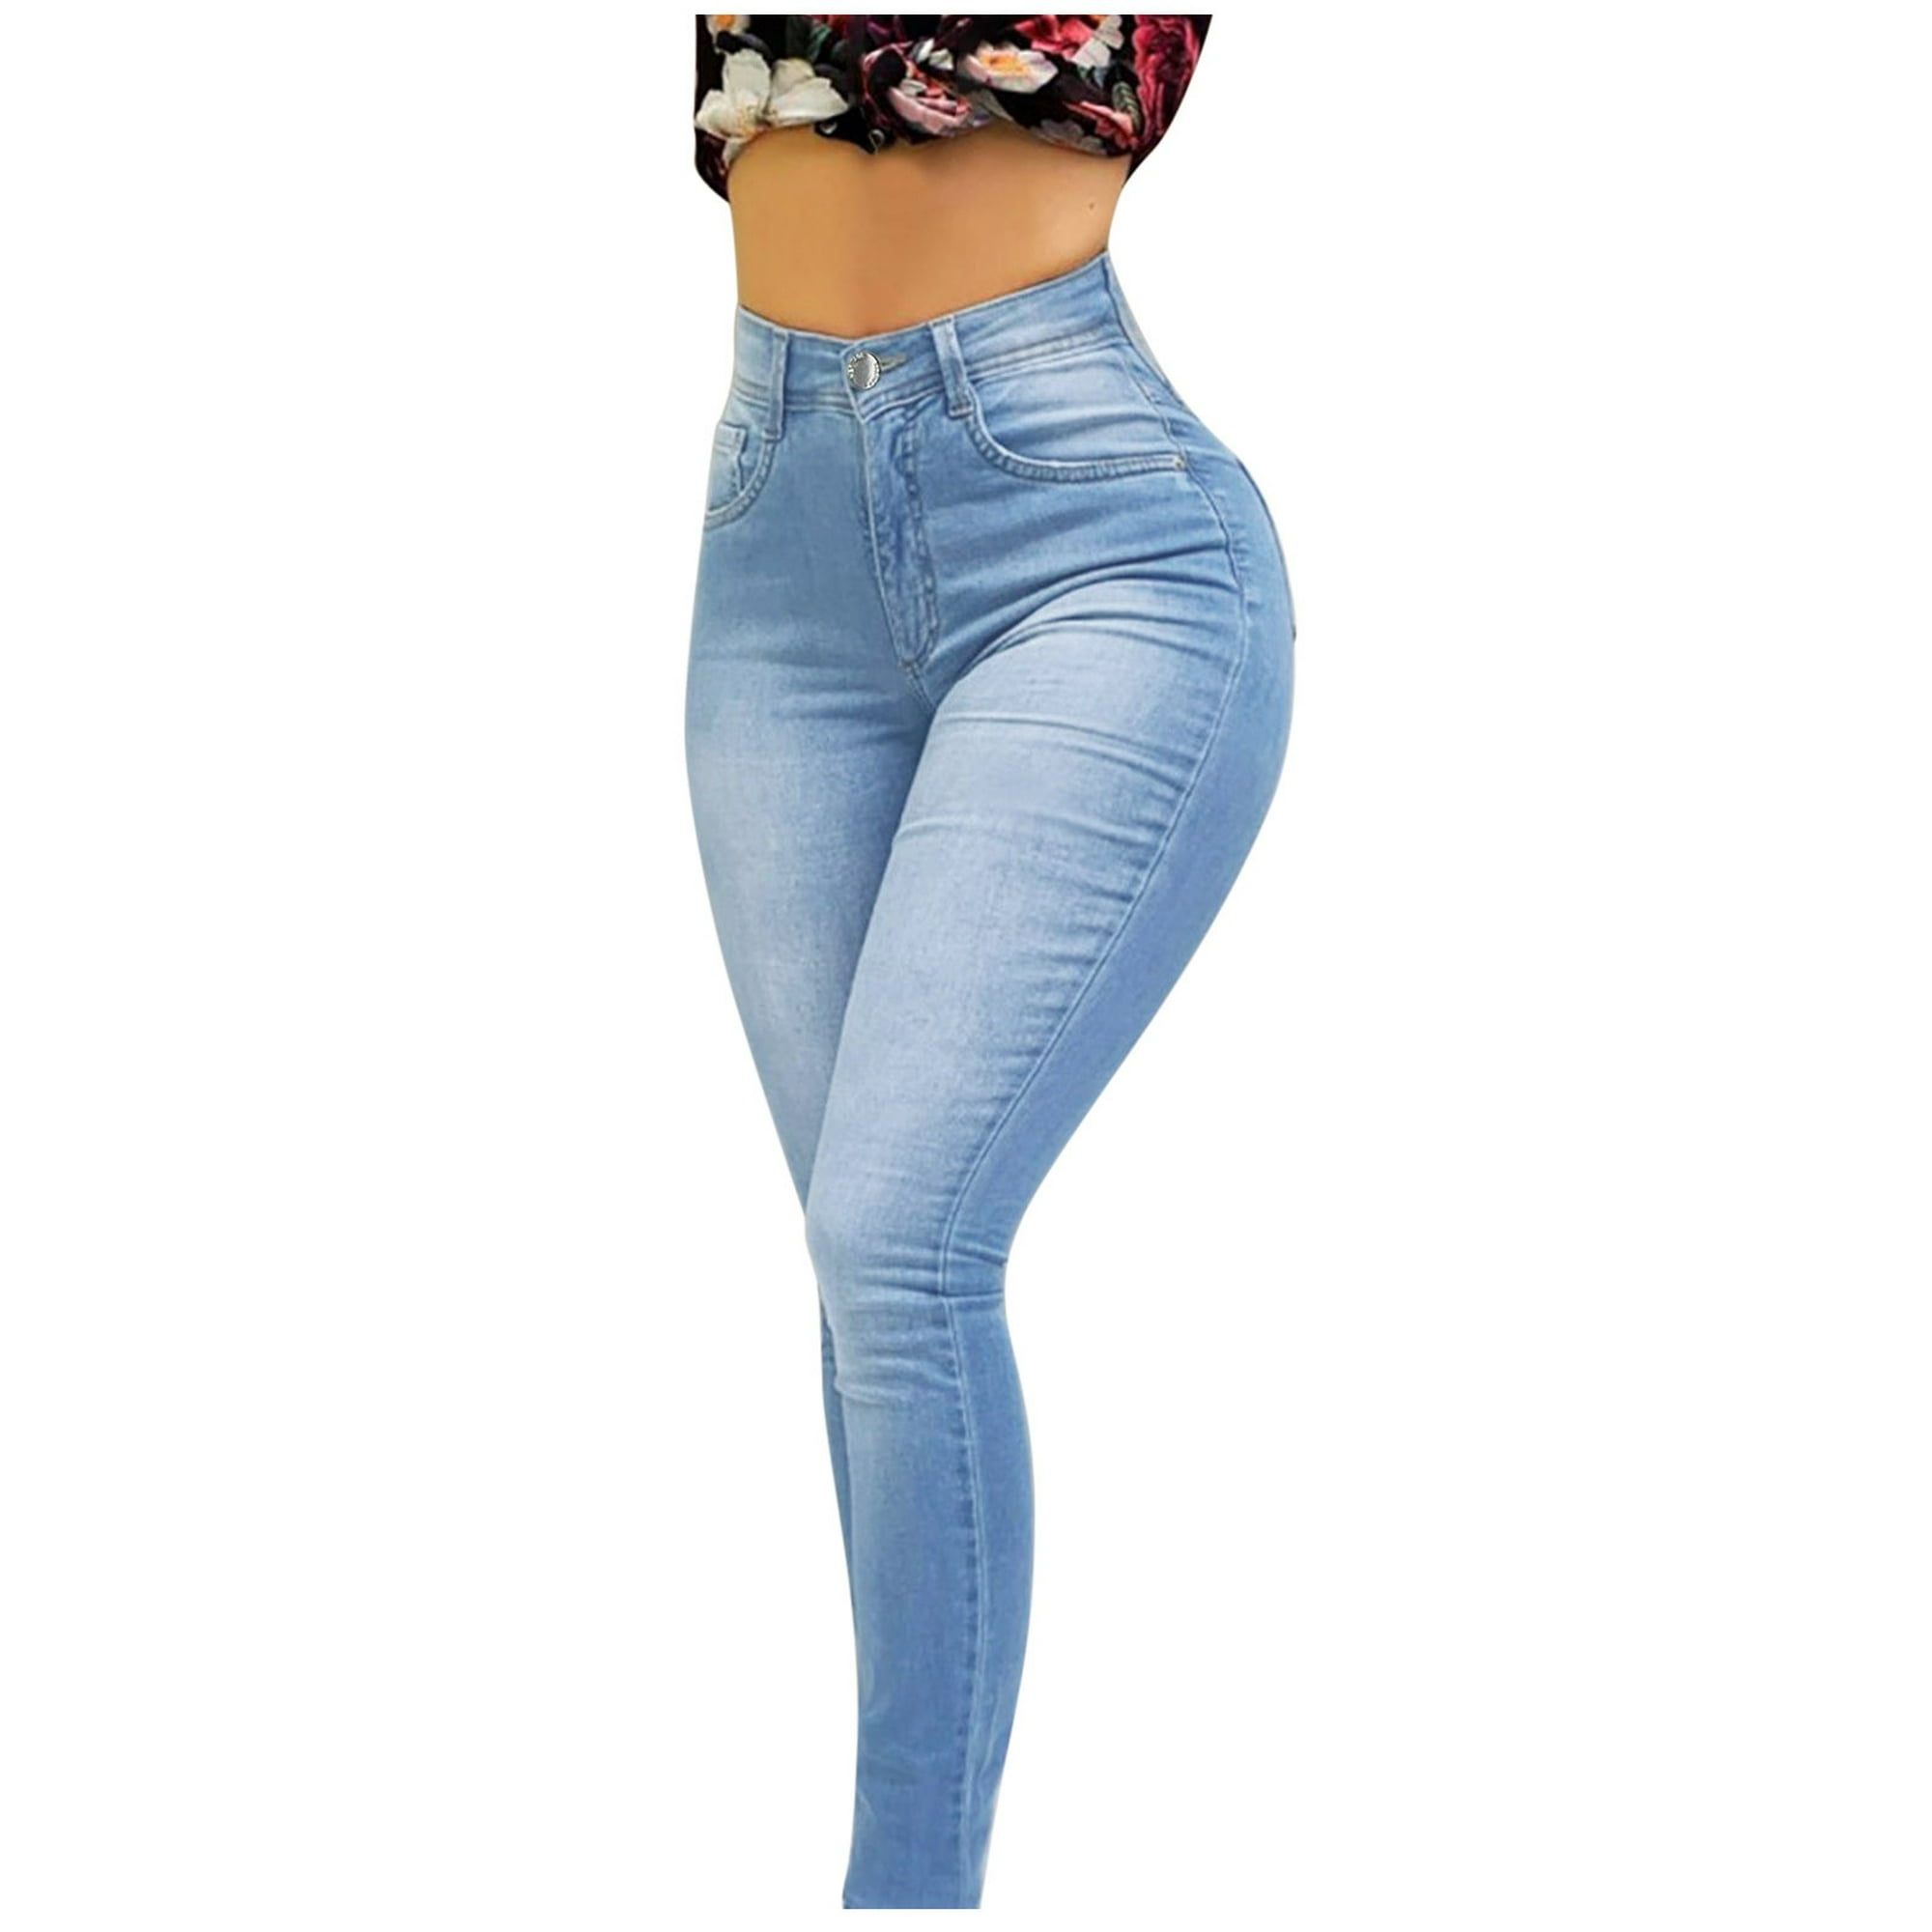 Gibobby Gibobby Pantalones Jean Mujer Juniors Jeans altos desgastados Lift  Jeans ajustados con cintura rasgada para mujer Jeans para mujer (Azul, S)